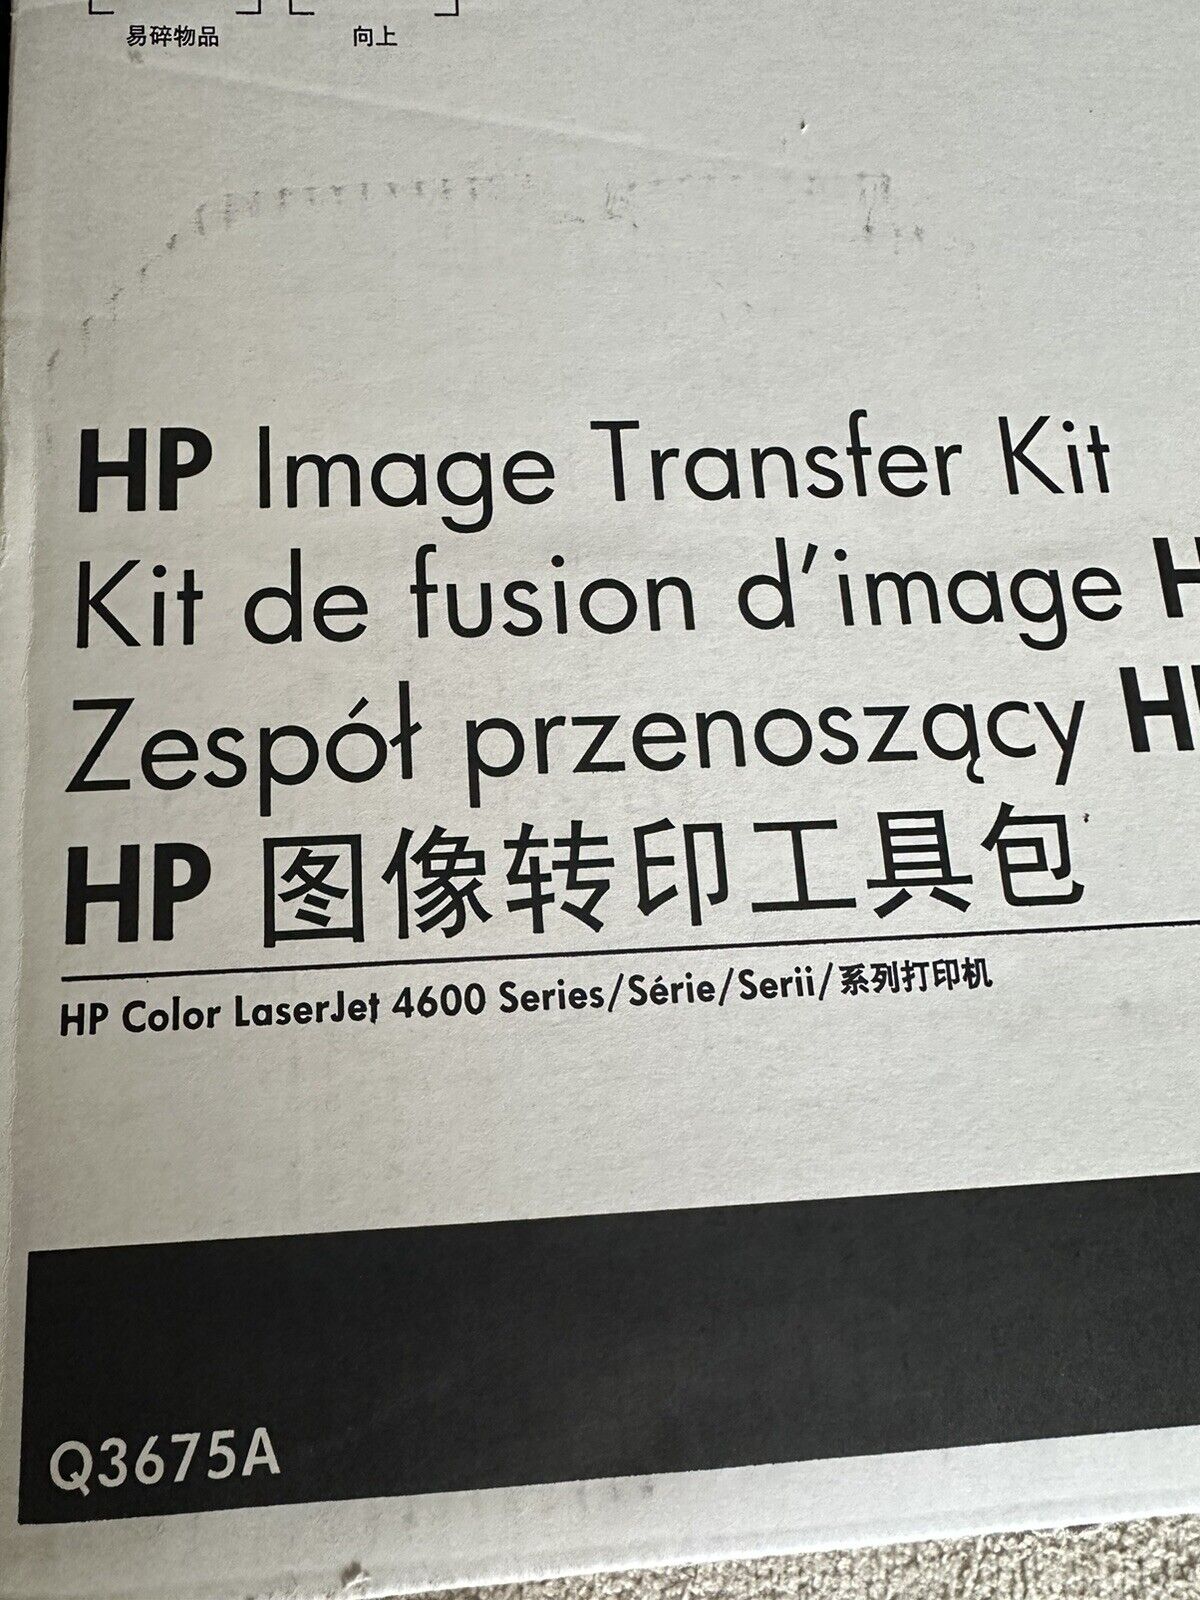 Genuine HP Q3675A Color Transfer Kit for Laserjet 4600 Series Printer